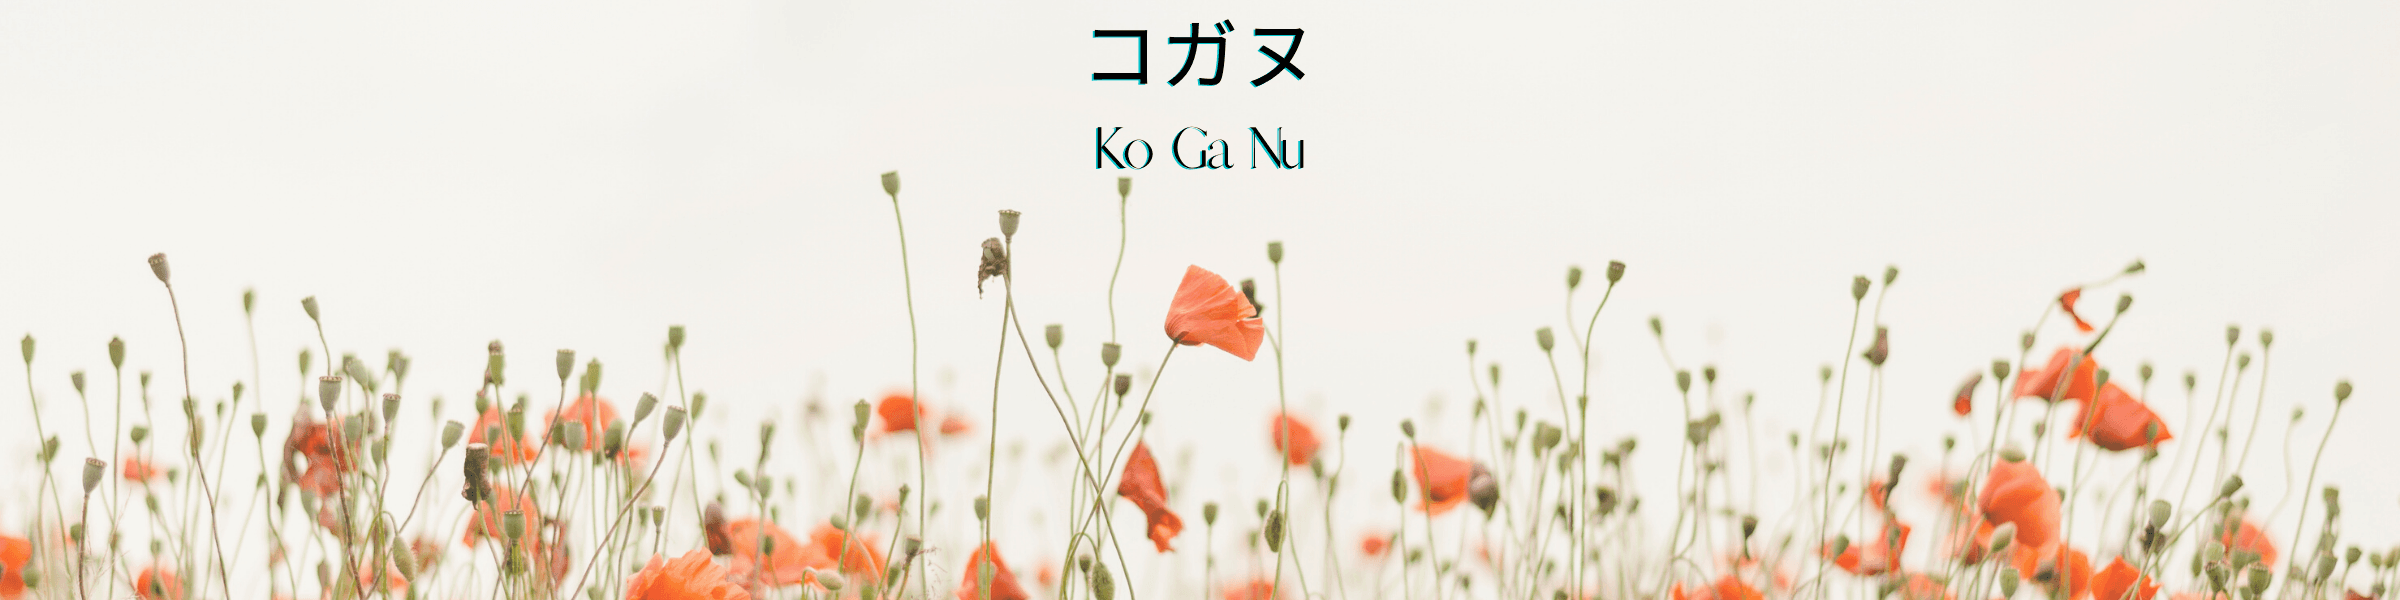 KoGaNu banner